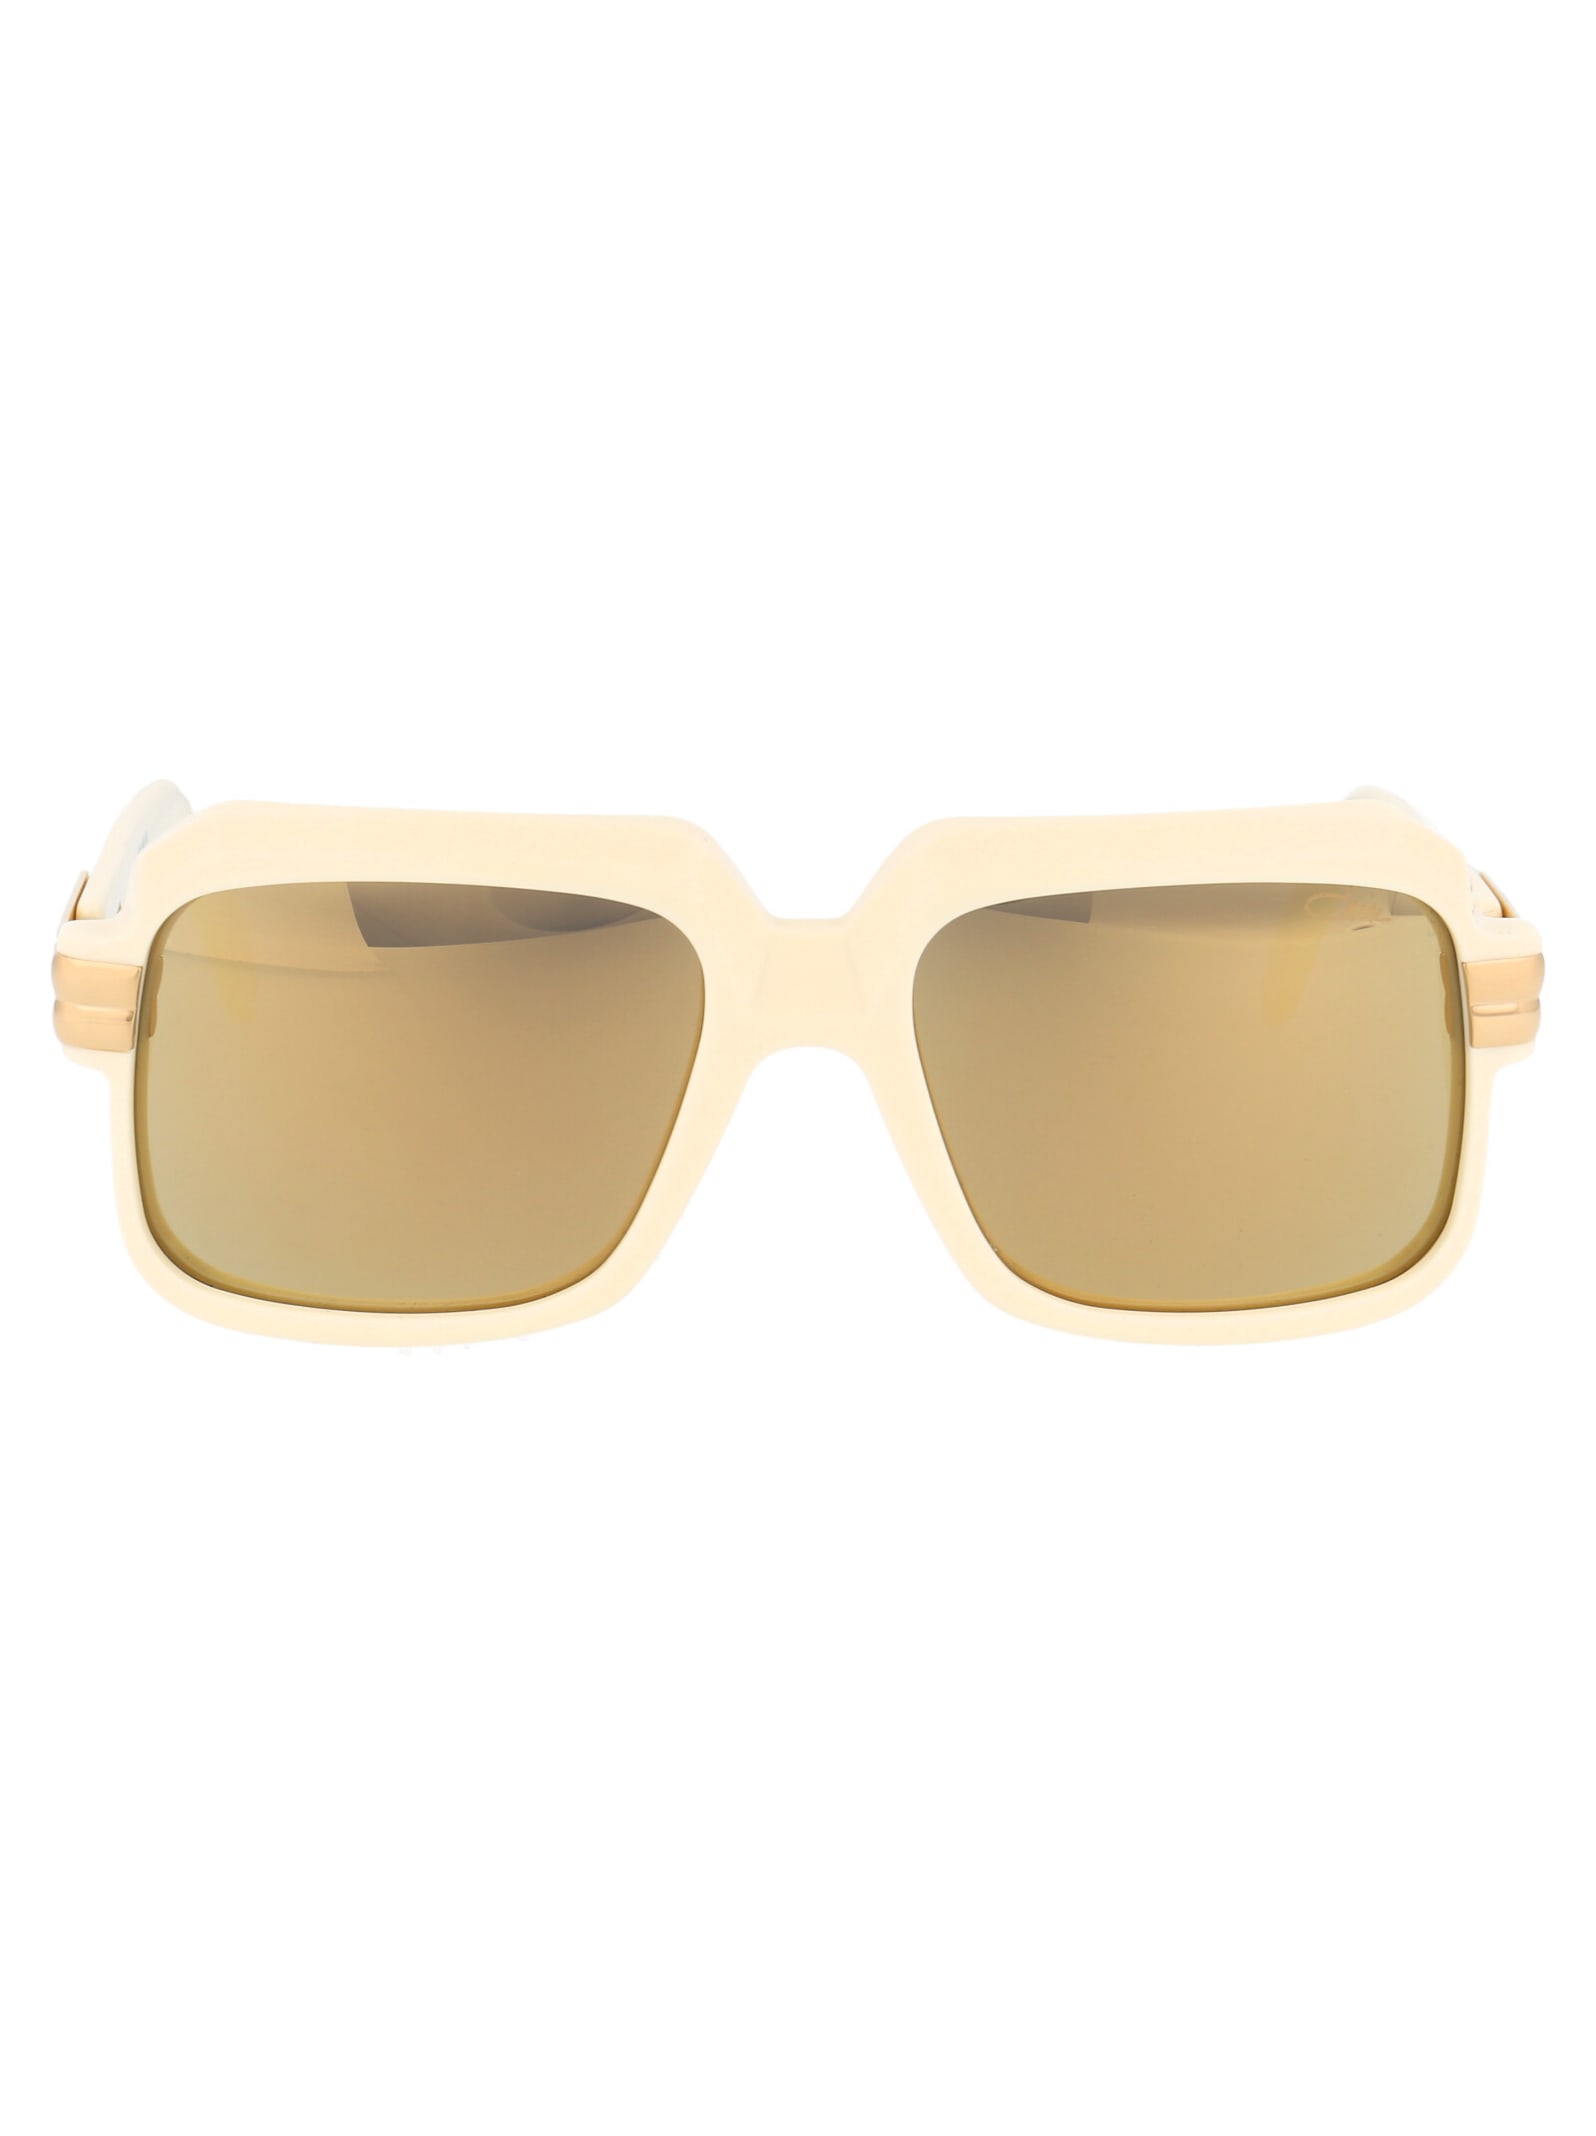 Cazal Mod. 607/3 Sunglasses